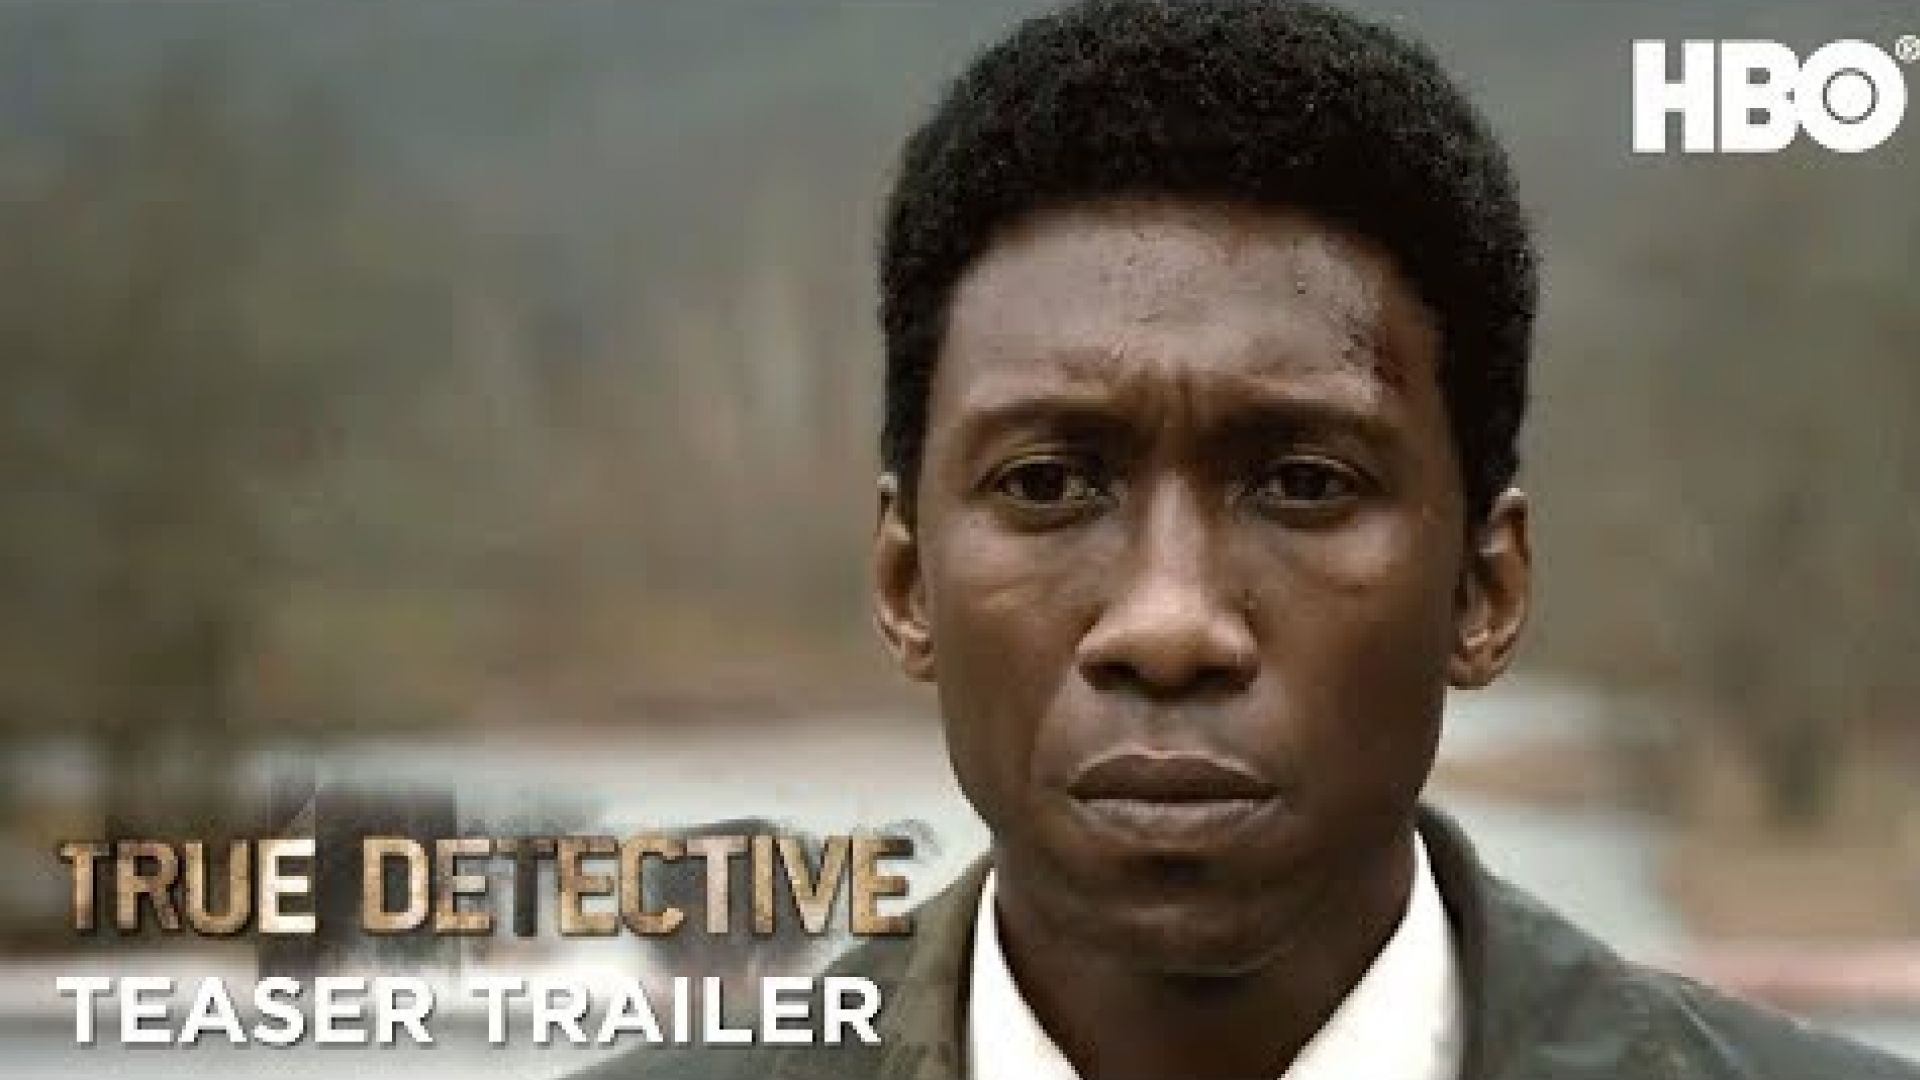 True Detective Season 3 Teaser Trailer